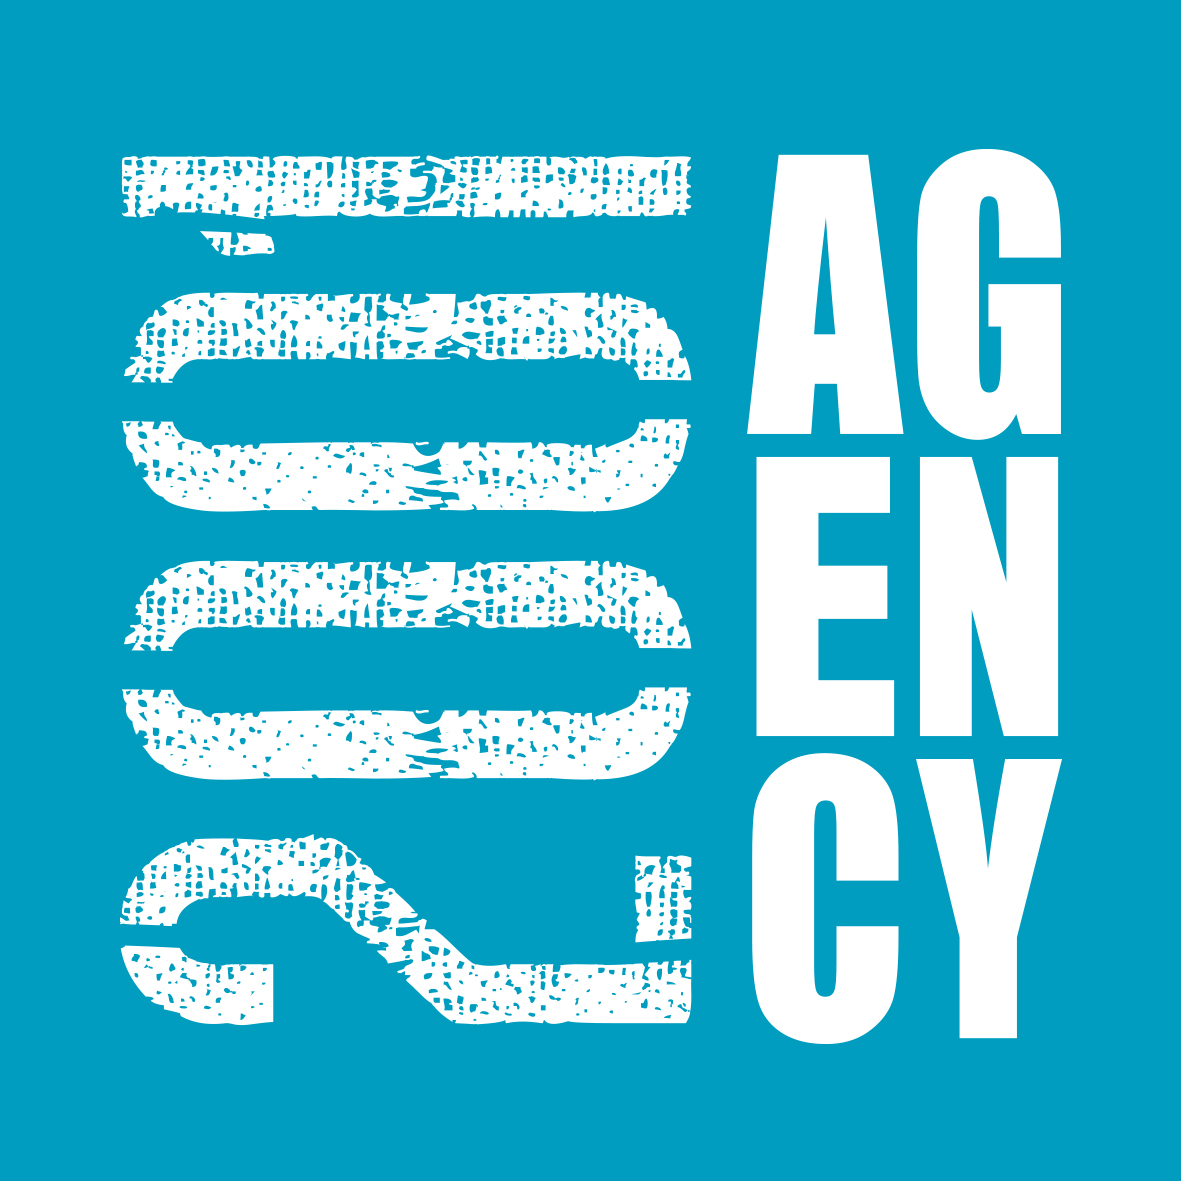 2001 Agency